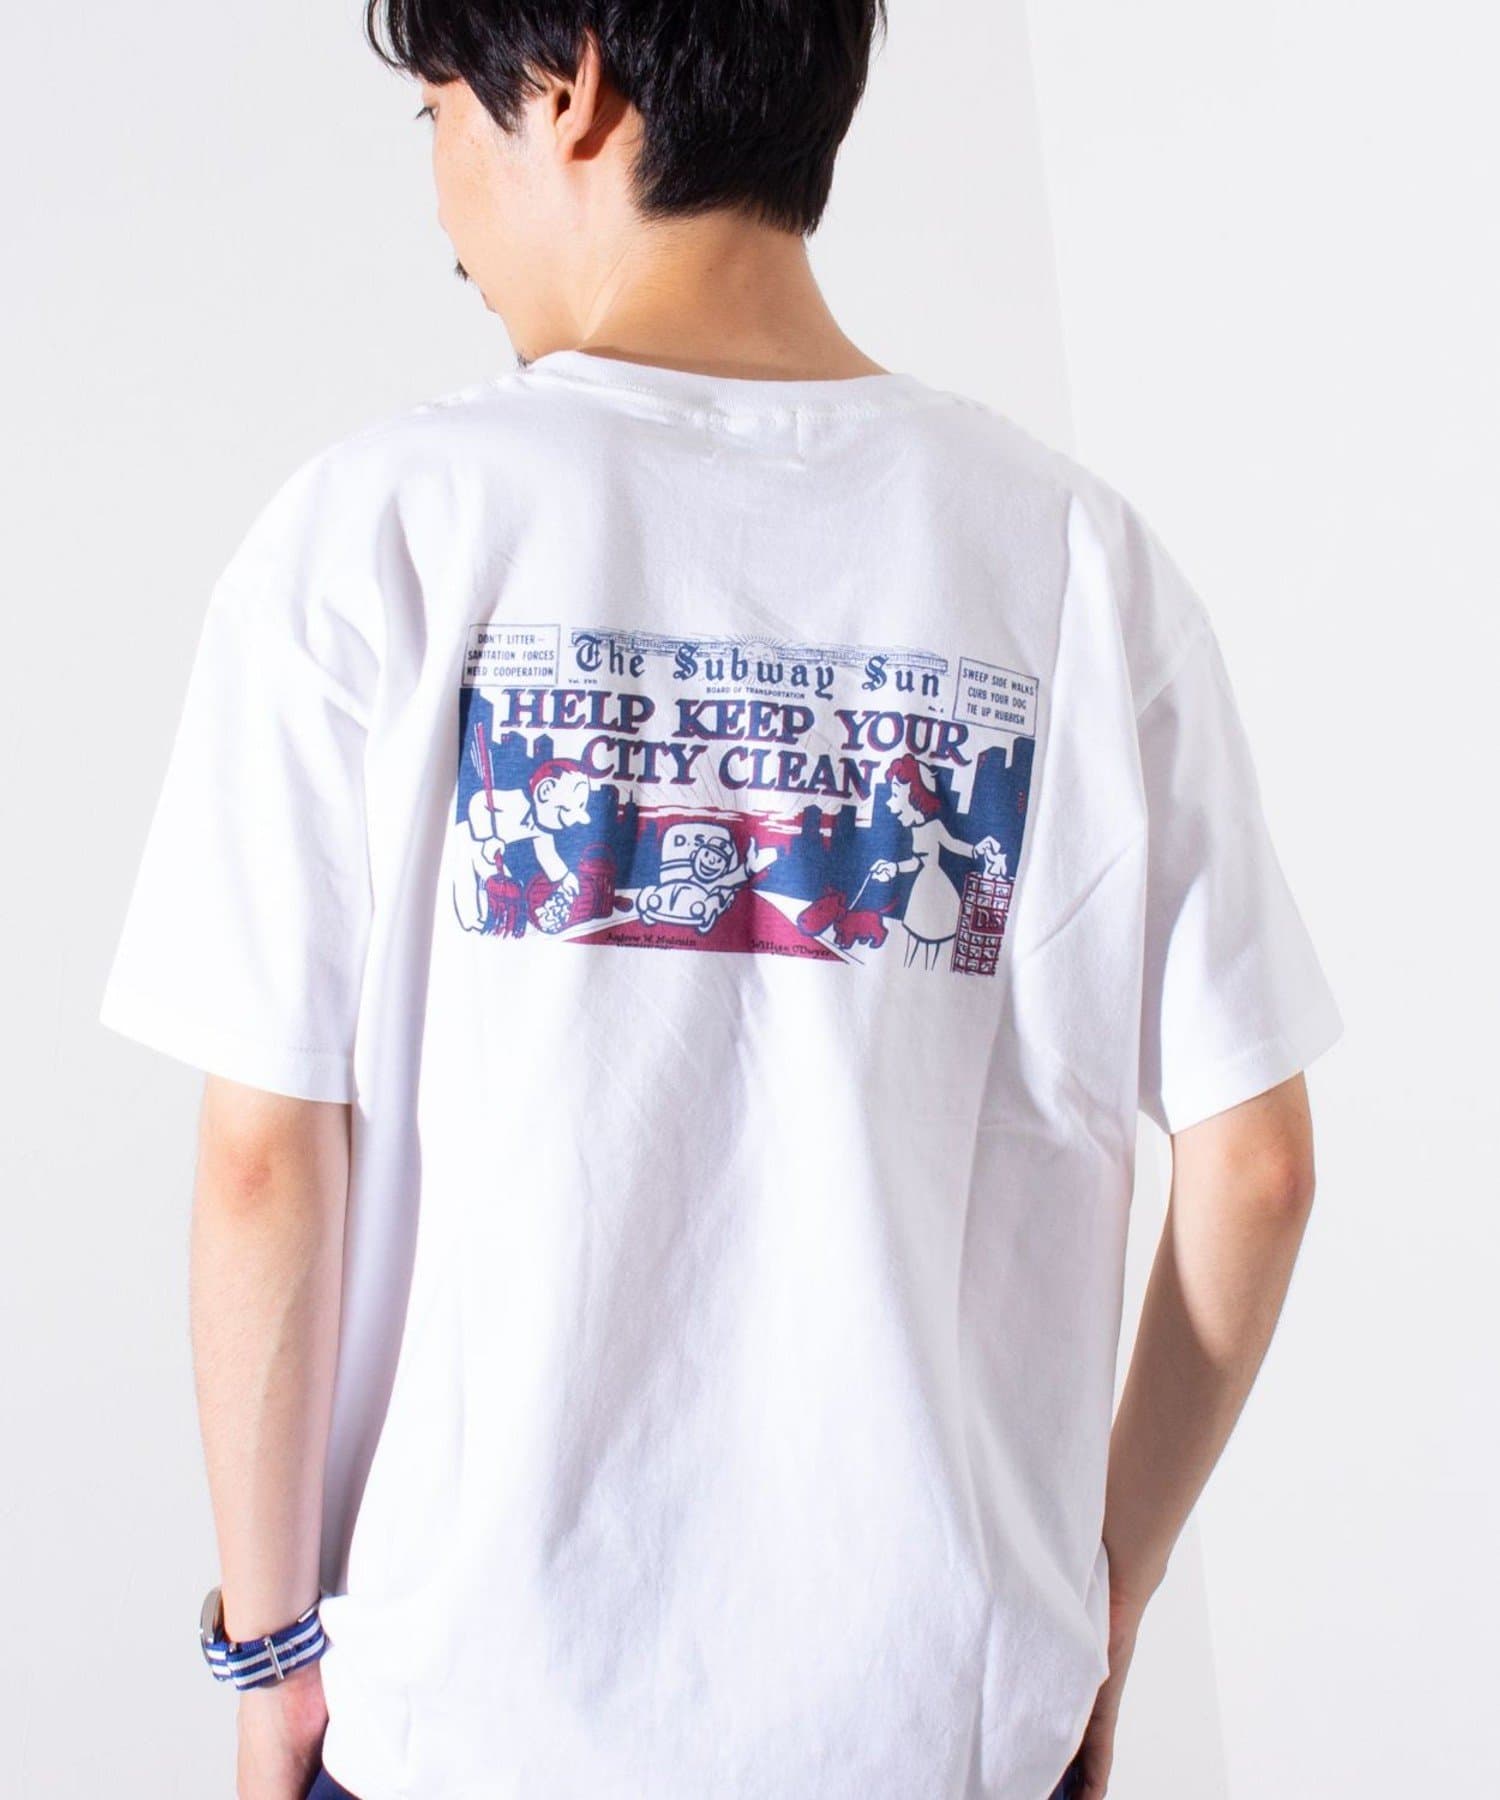 FREDY & GLOSTER(フレディ アンド グロスター) 【MTA】ロゴプリントTシャツ バックプリント ワンポイントロゴ